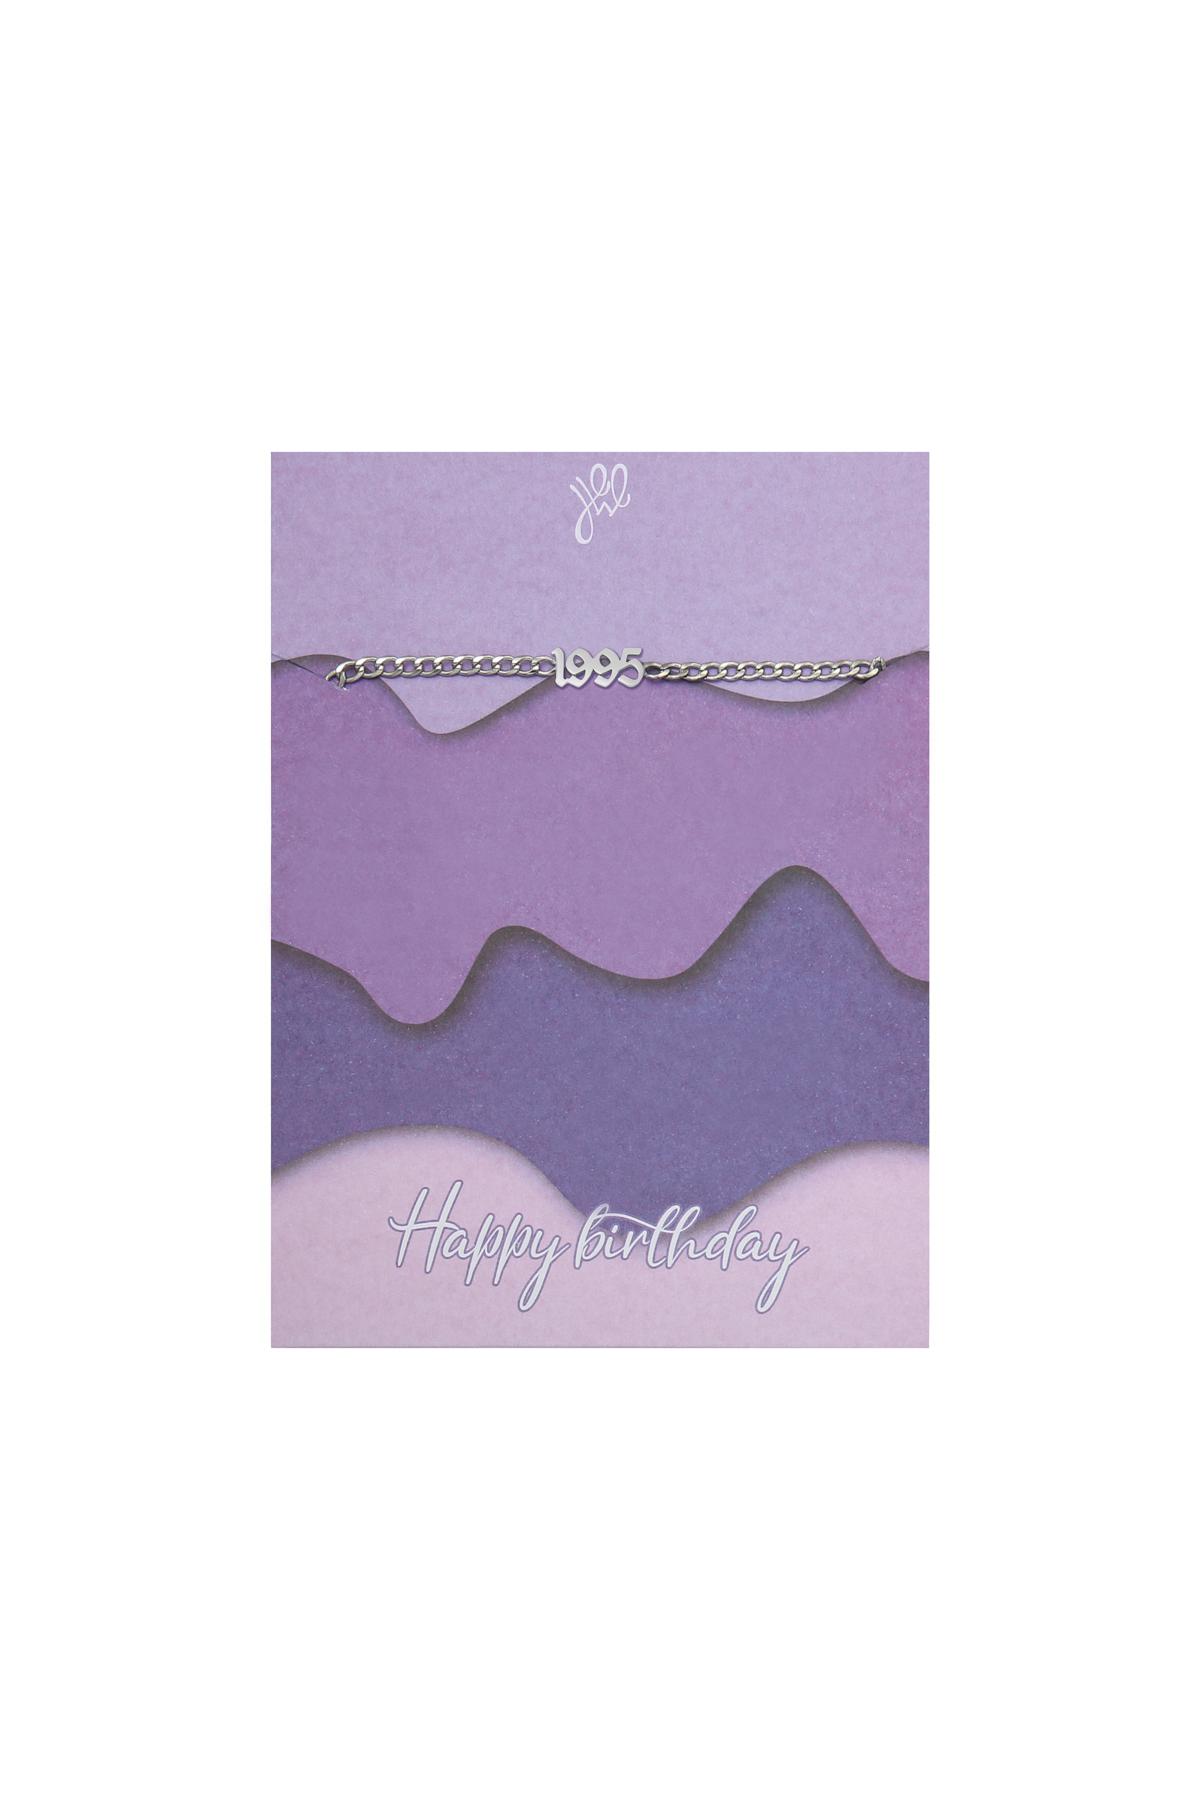 Silber / Armband Happy Birthday Years - 1995 Silber Edelstahl Bild5